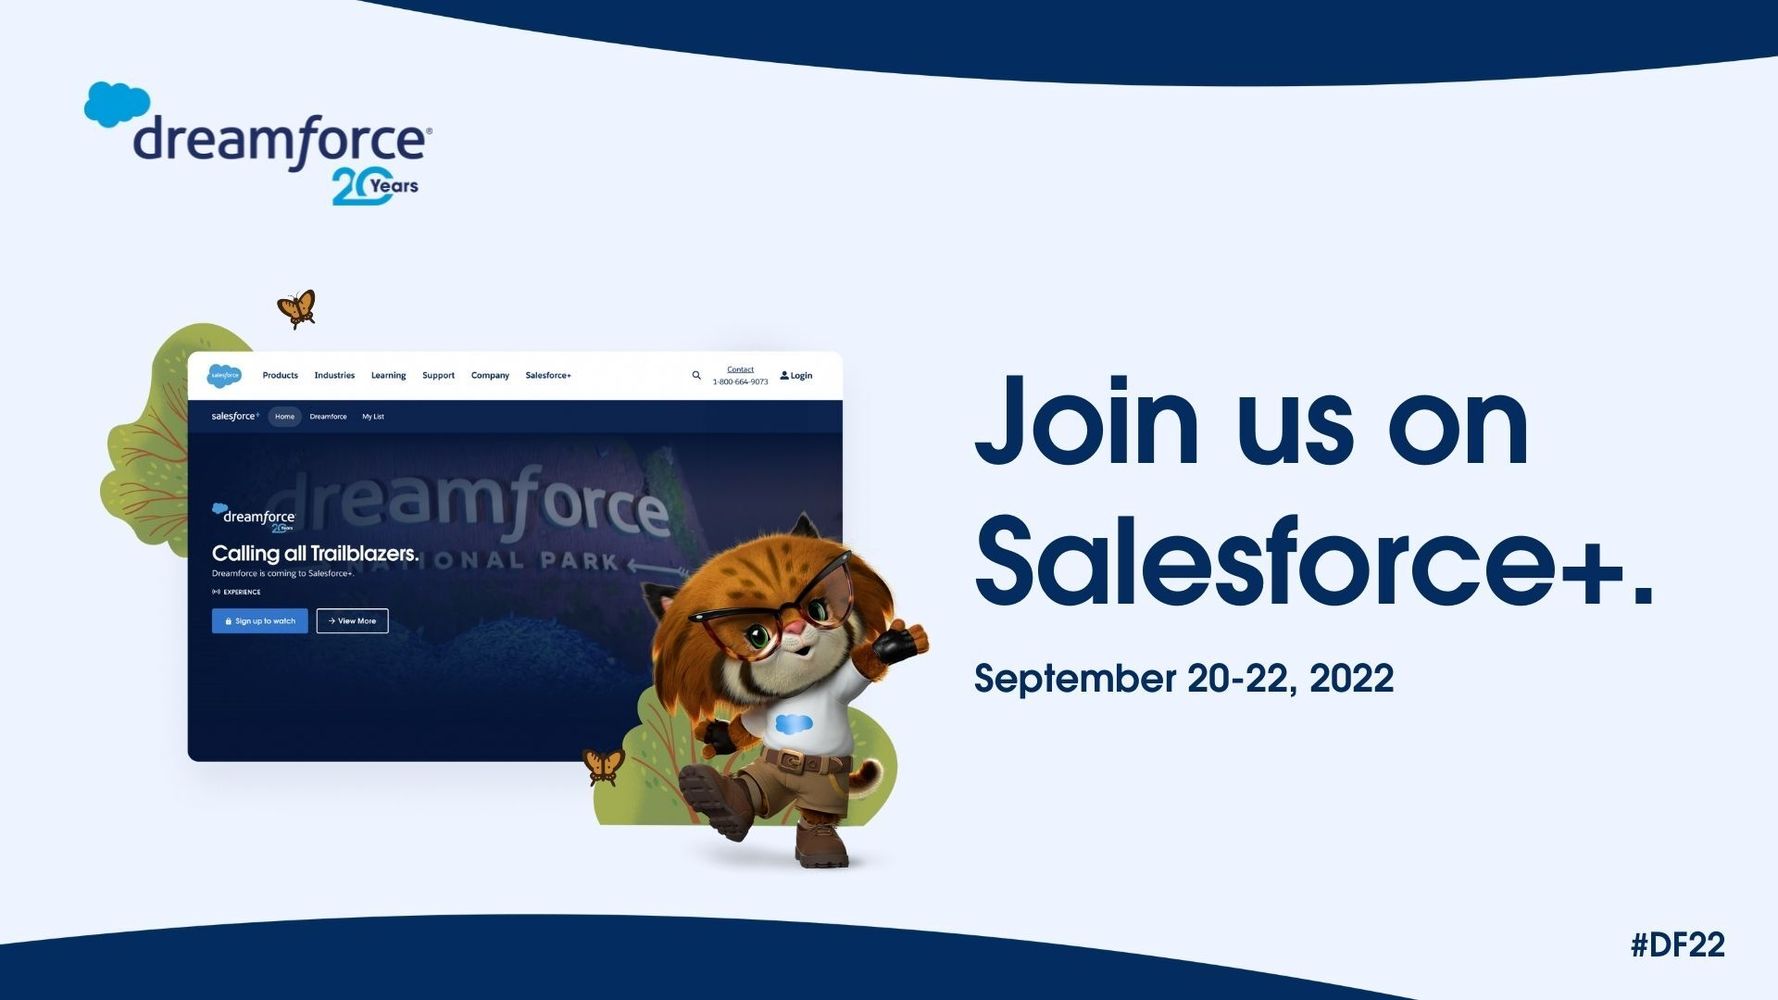 Osallistu Dreamforceen Salesforcen+:n kautta